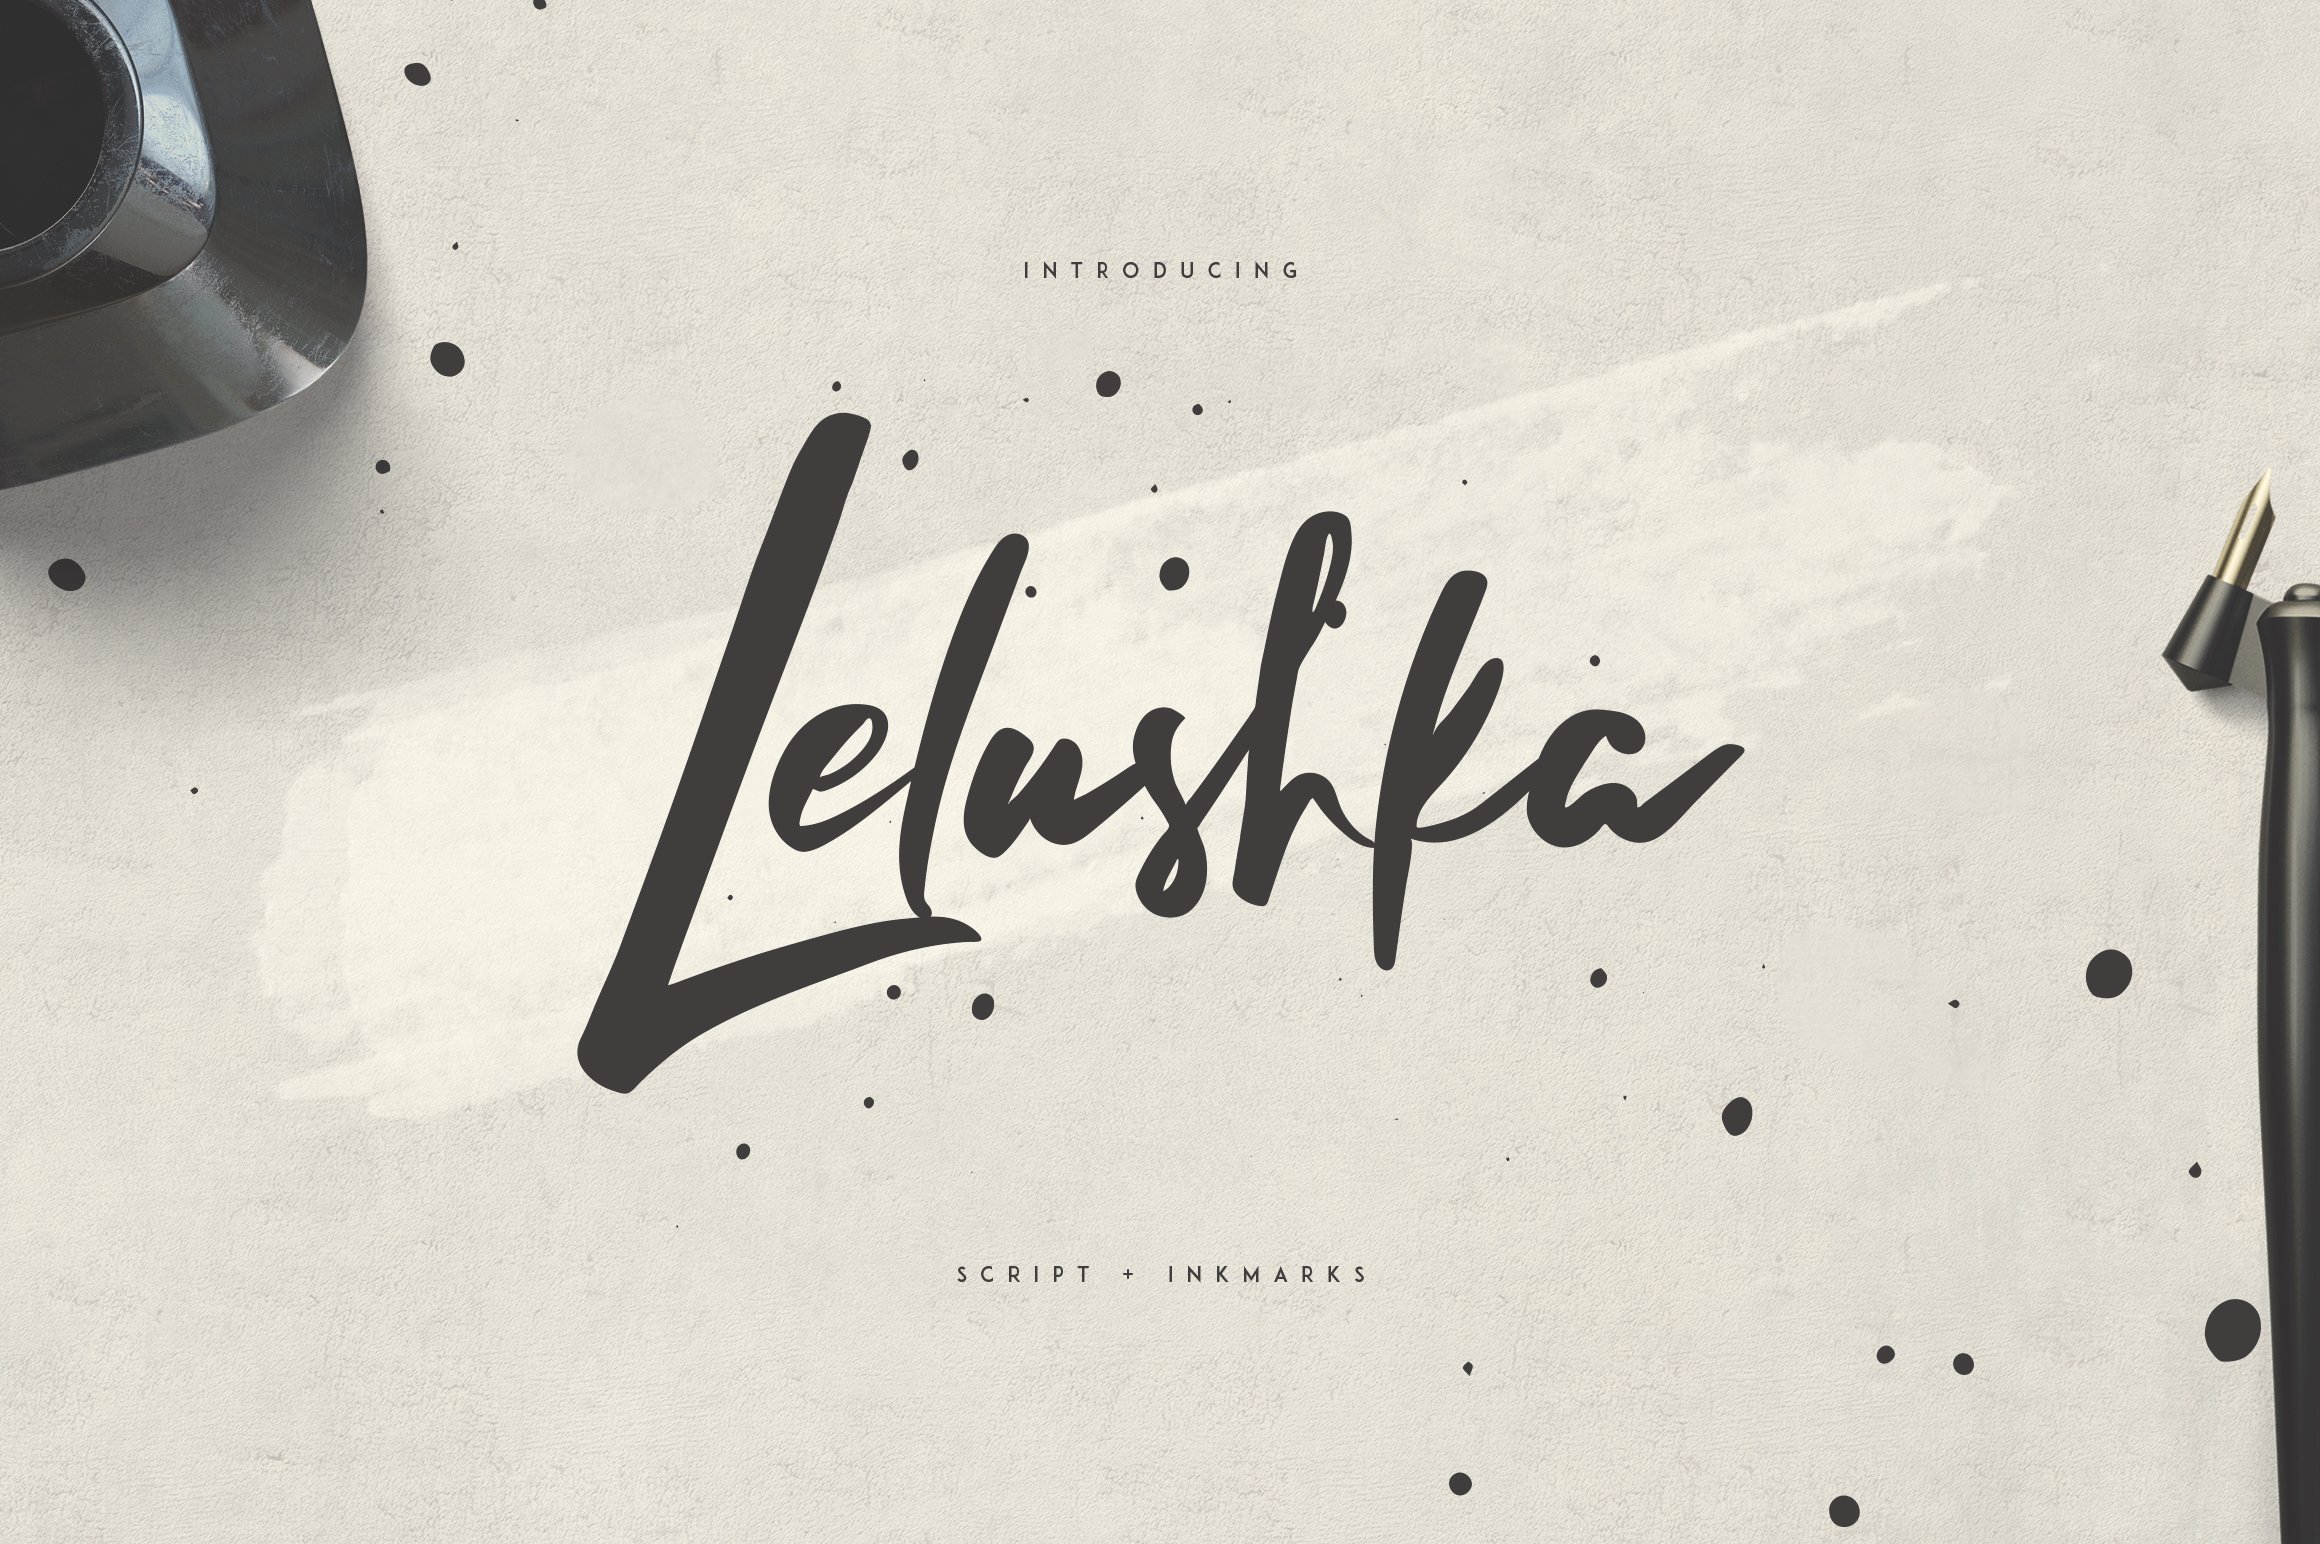 Lelushka Script + Ink marks cover image.